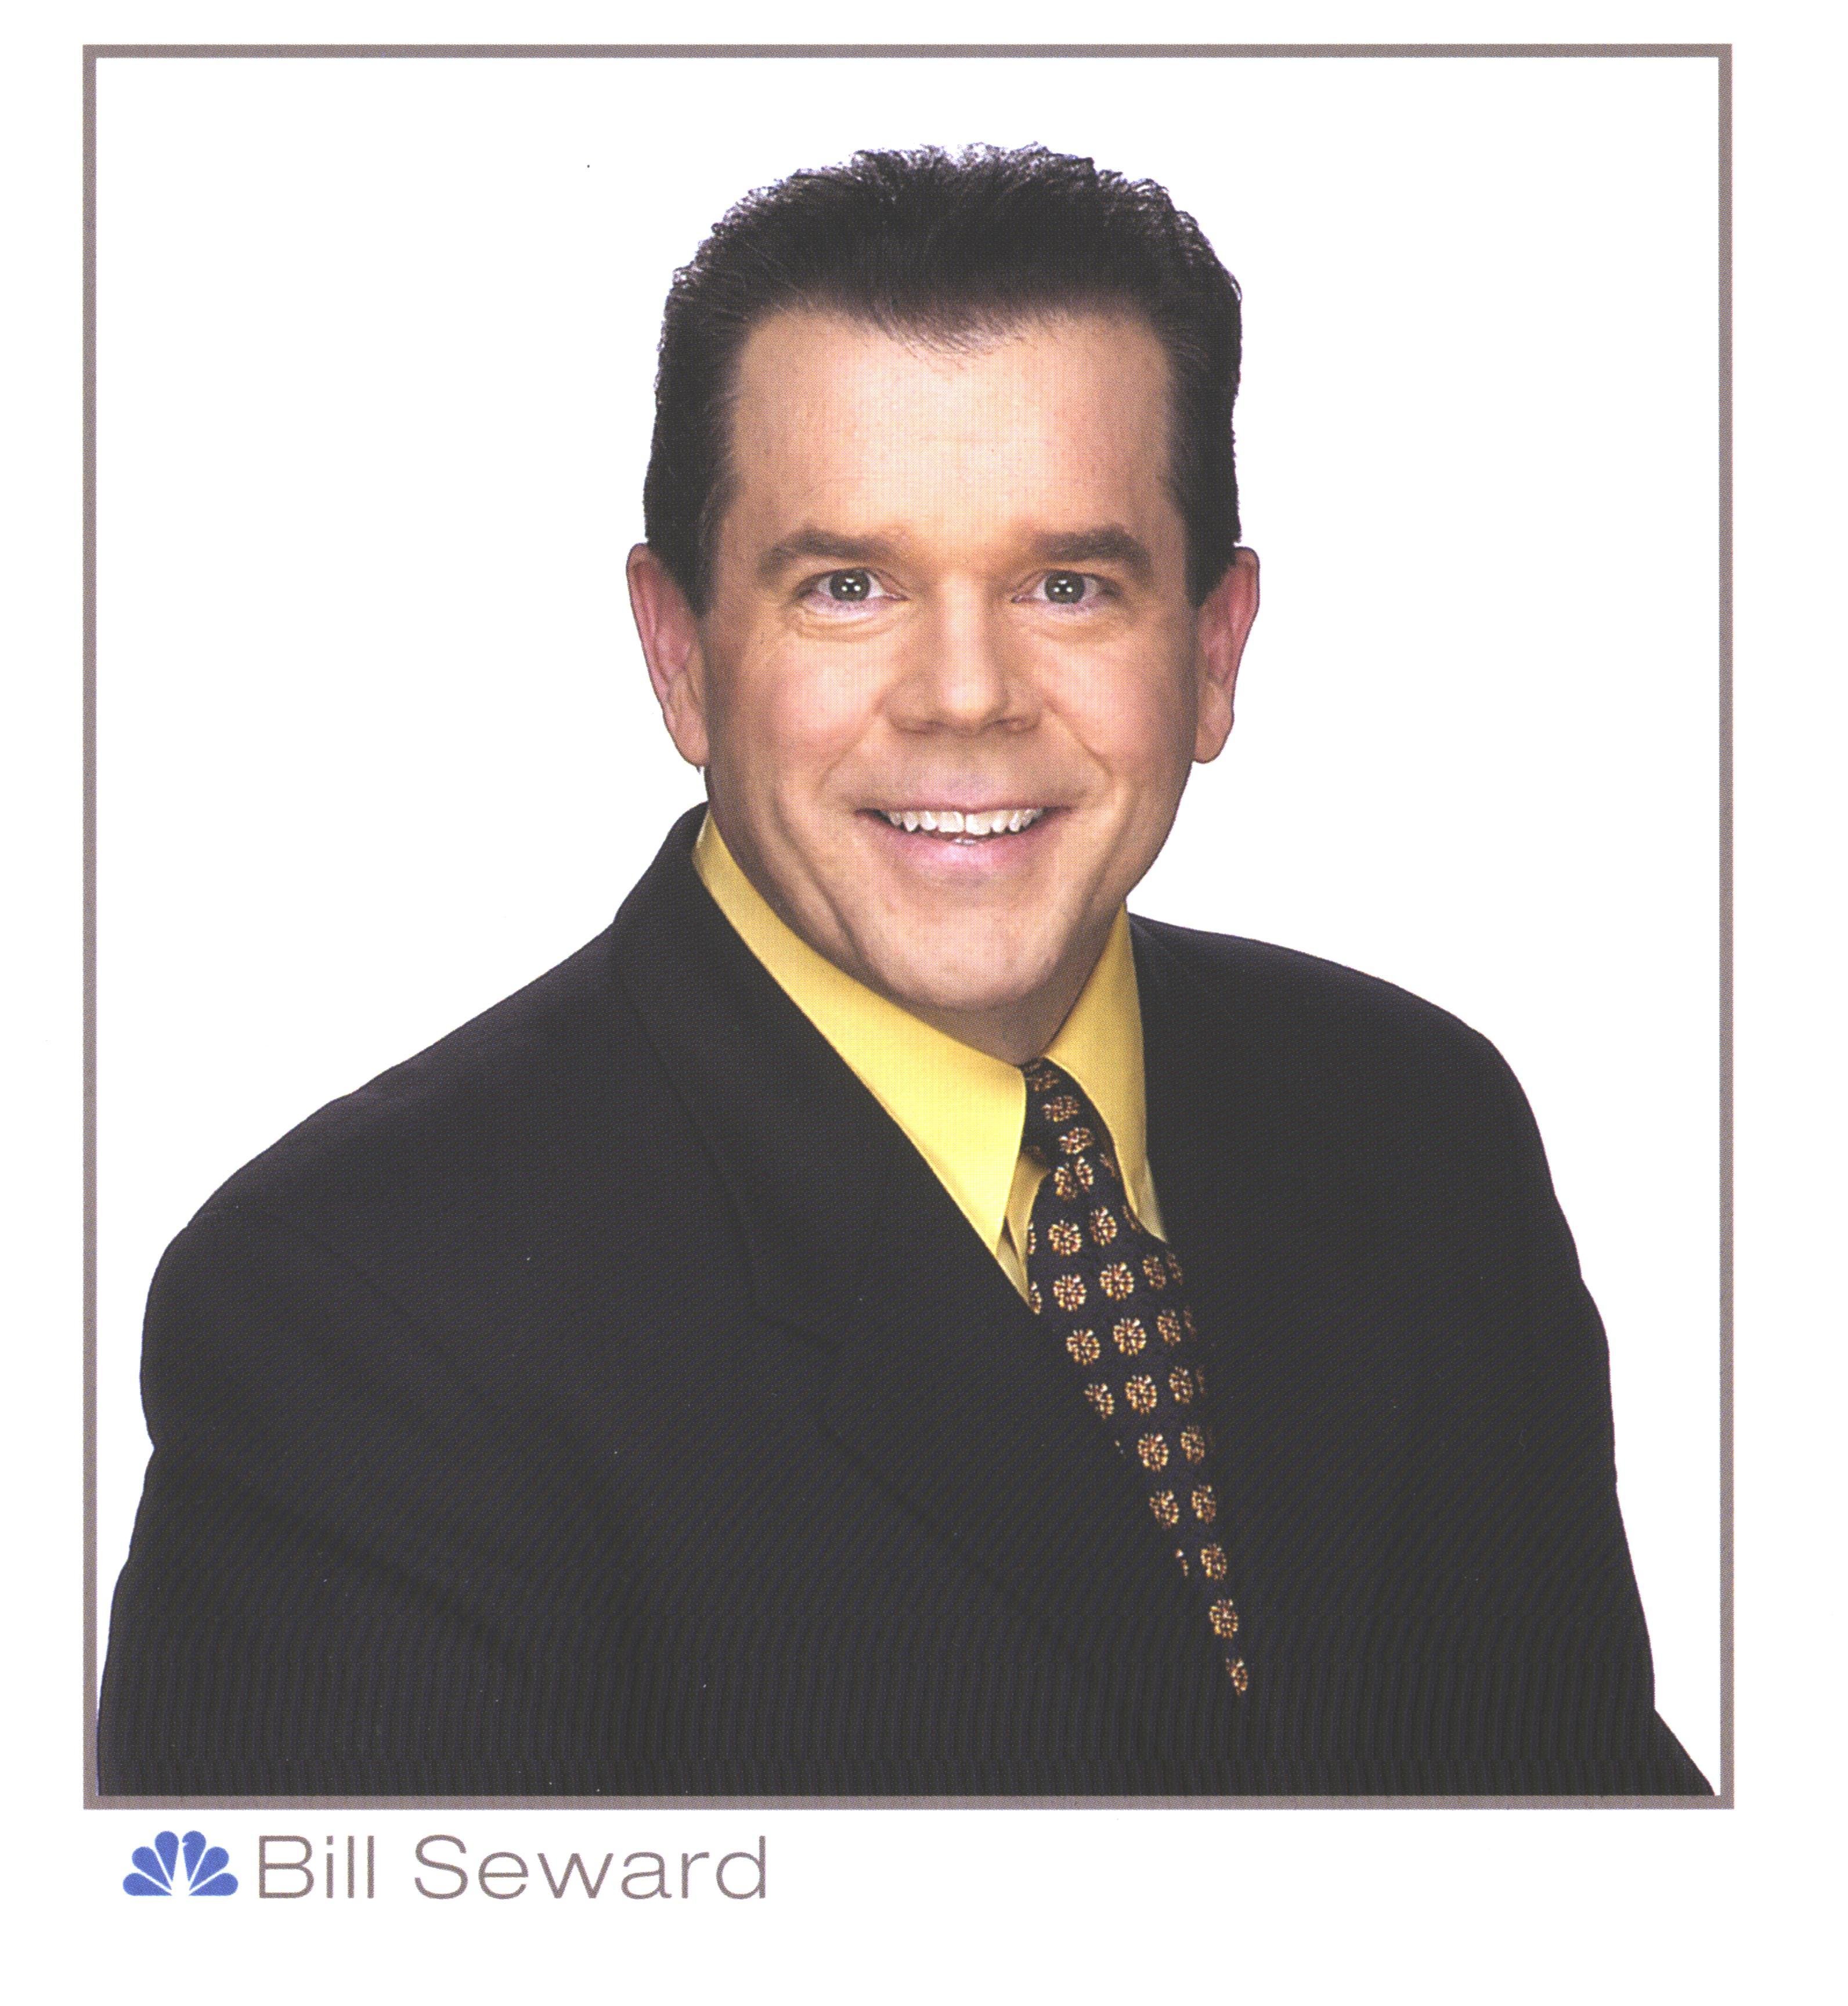 Bill Seward